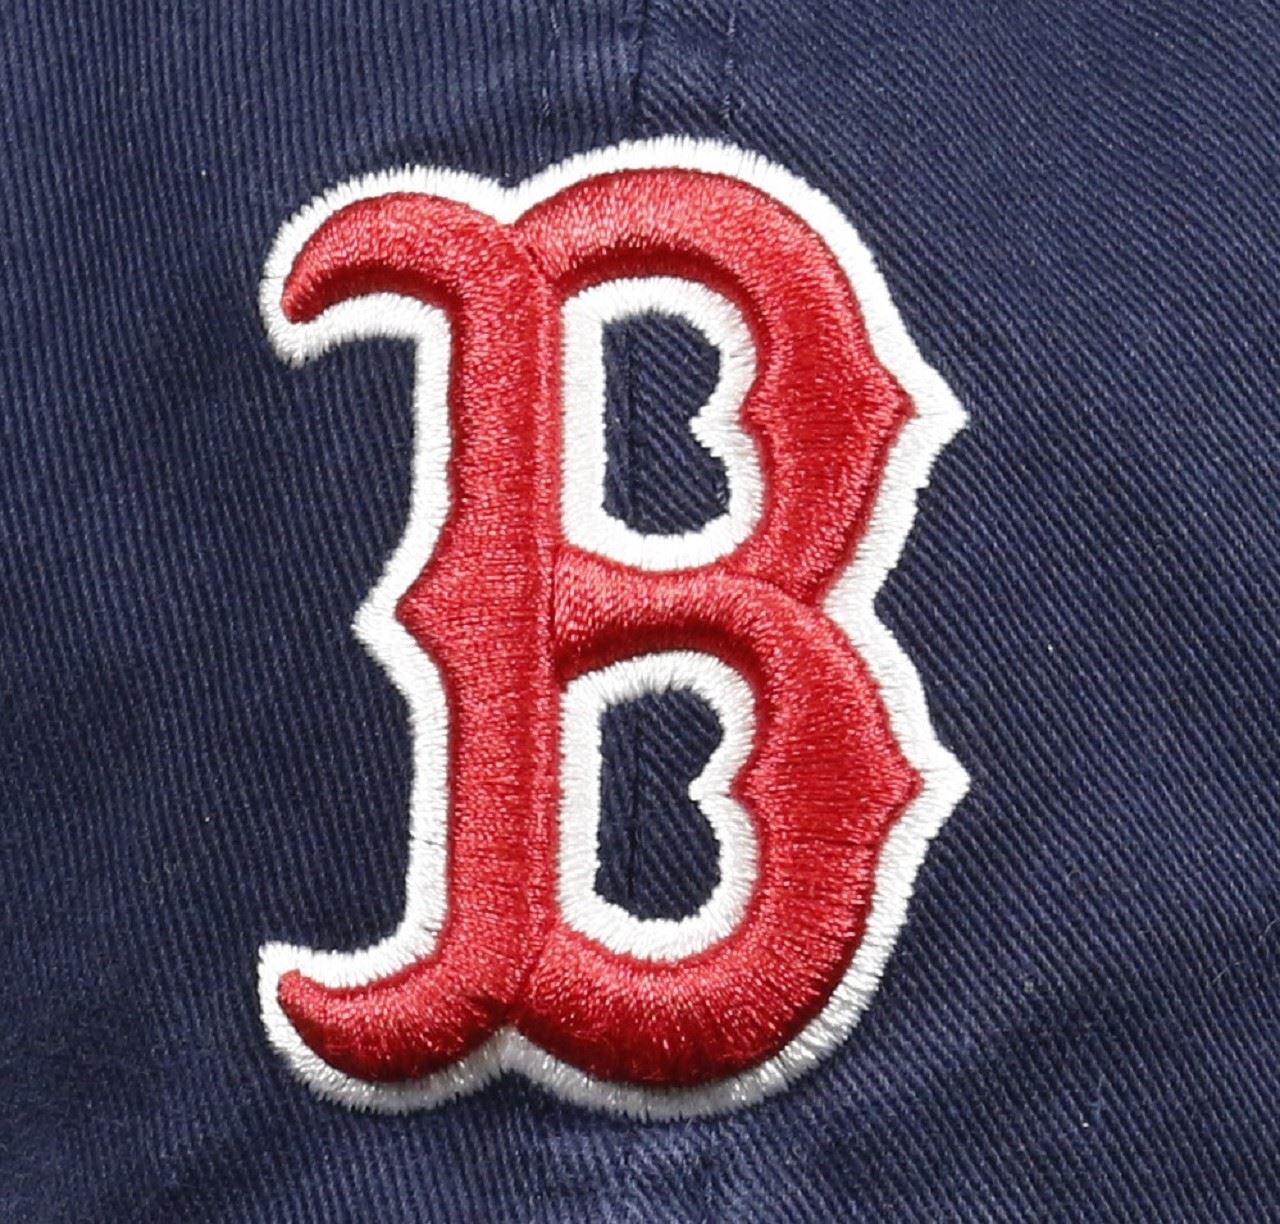 Boston Red Sox Navy MLB Clean Up Cap '47